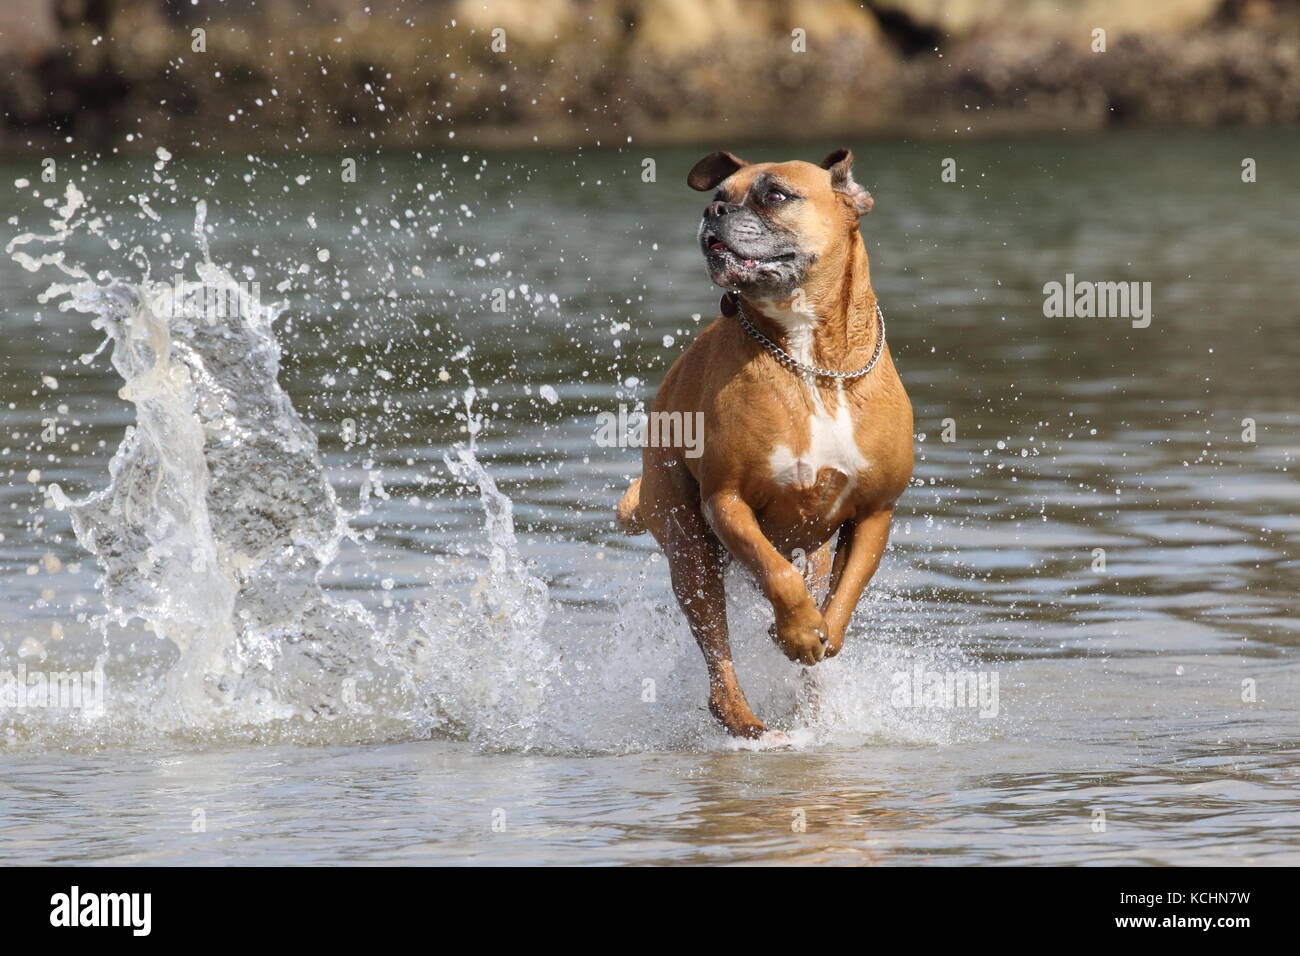 Boxer dog running playfully through water Stock Photo